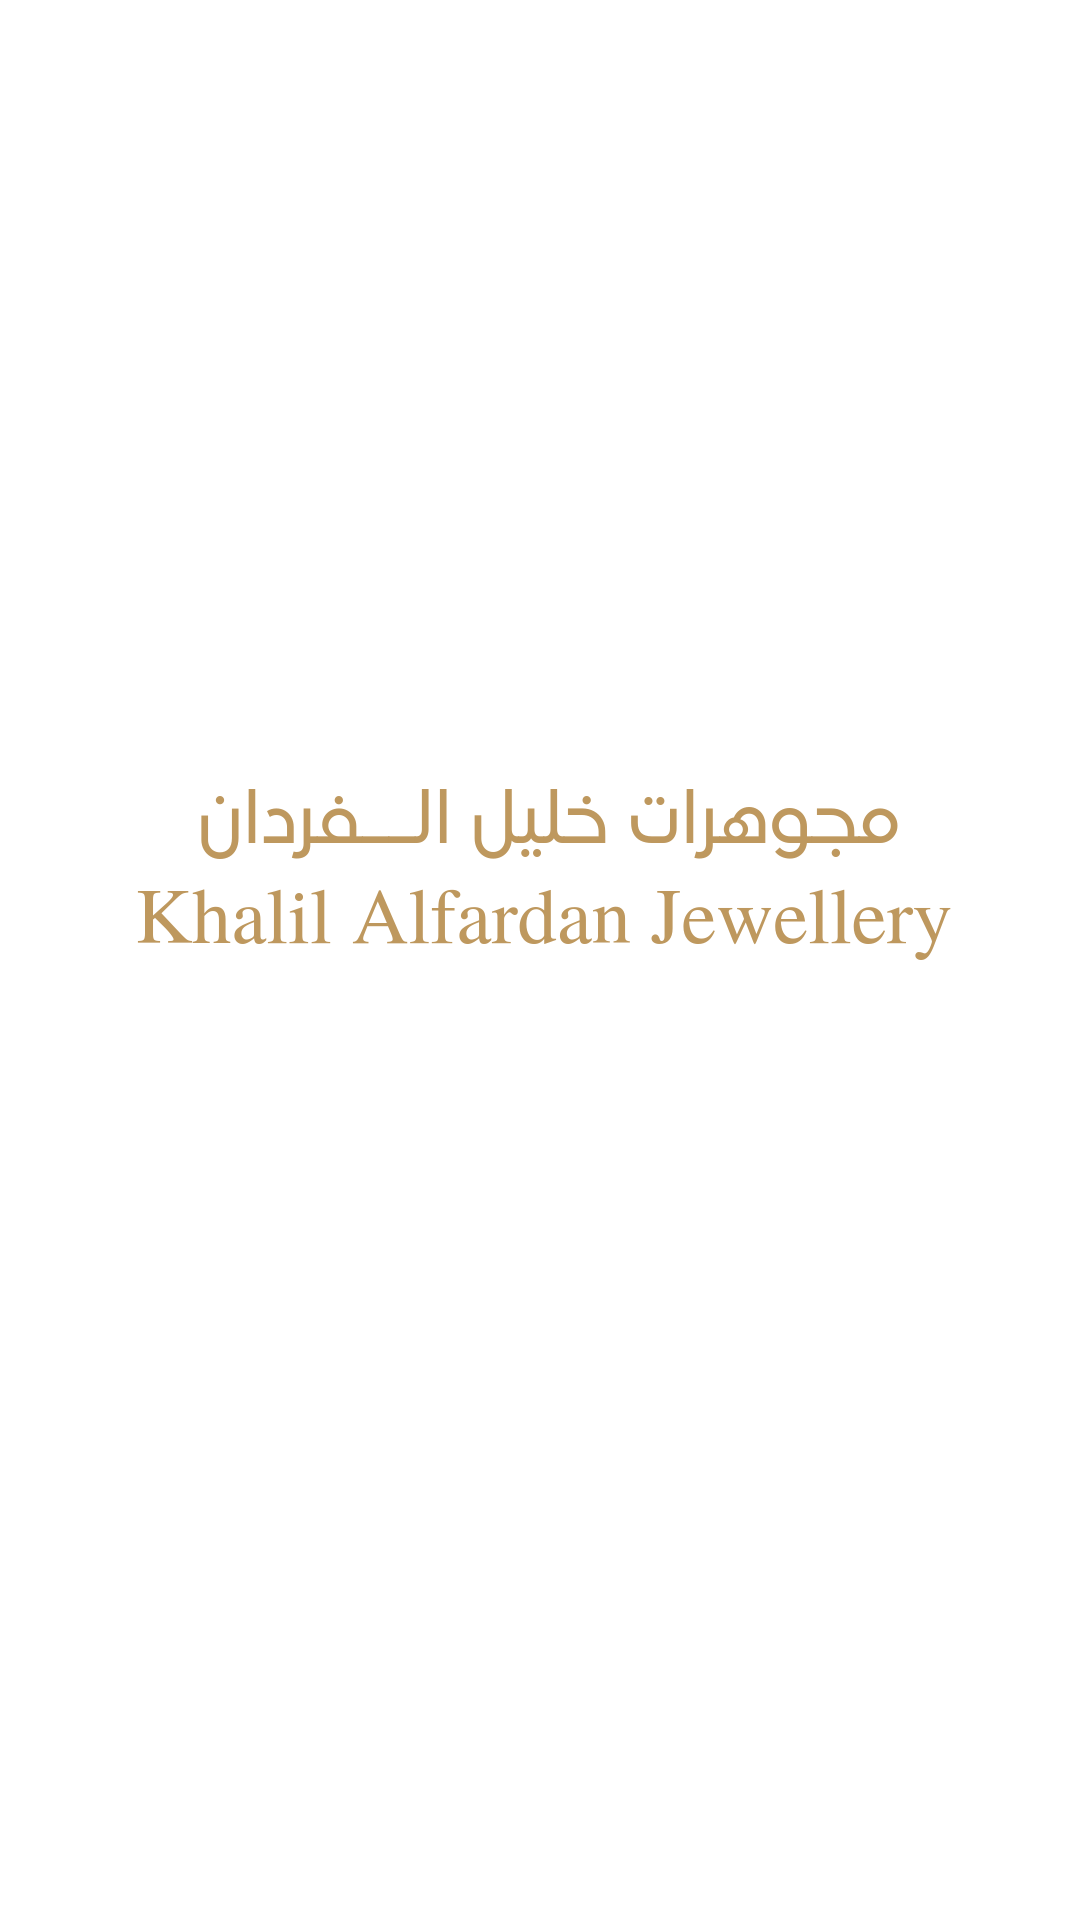 Khalil Ebrahim Hasan Fardan Jewellery Co